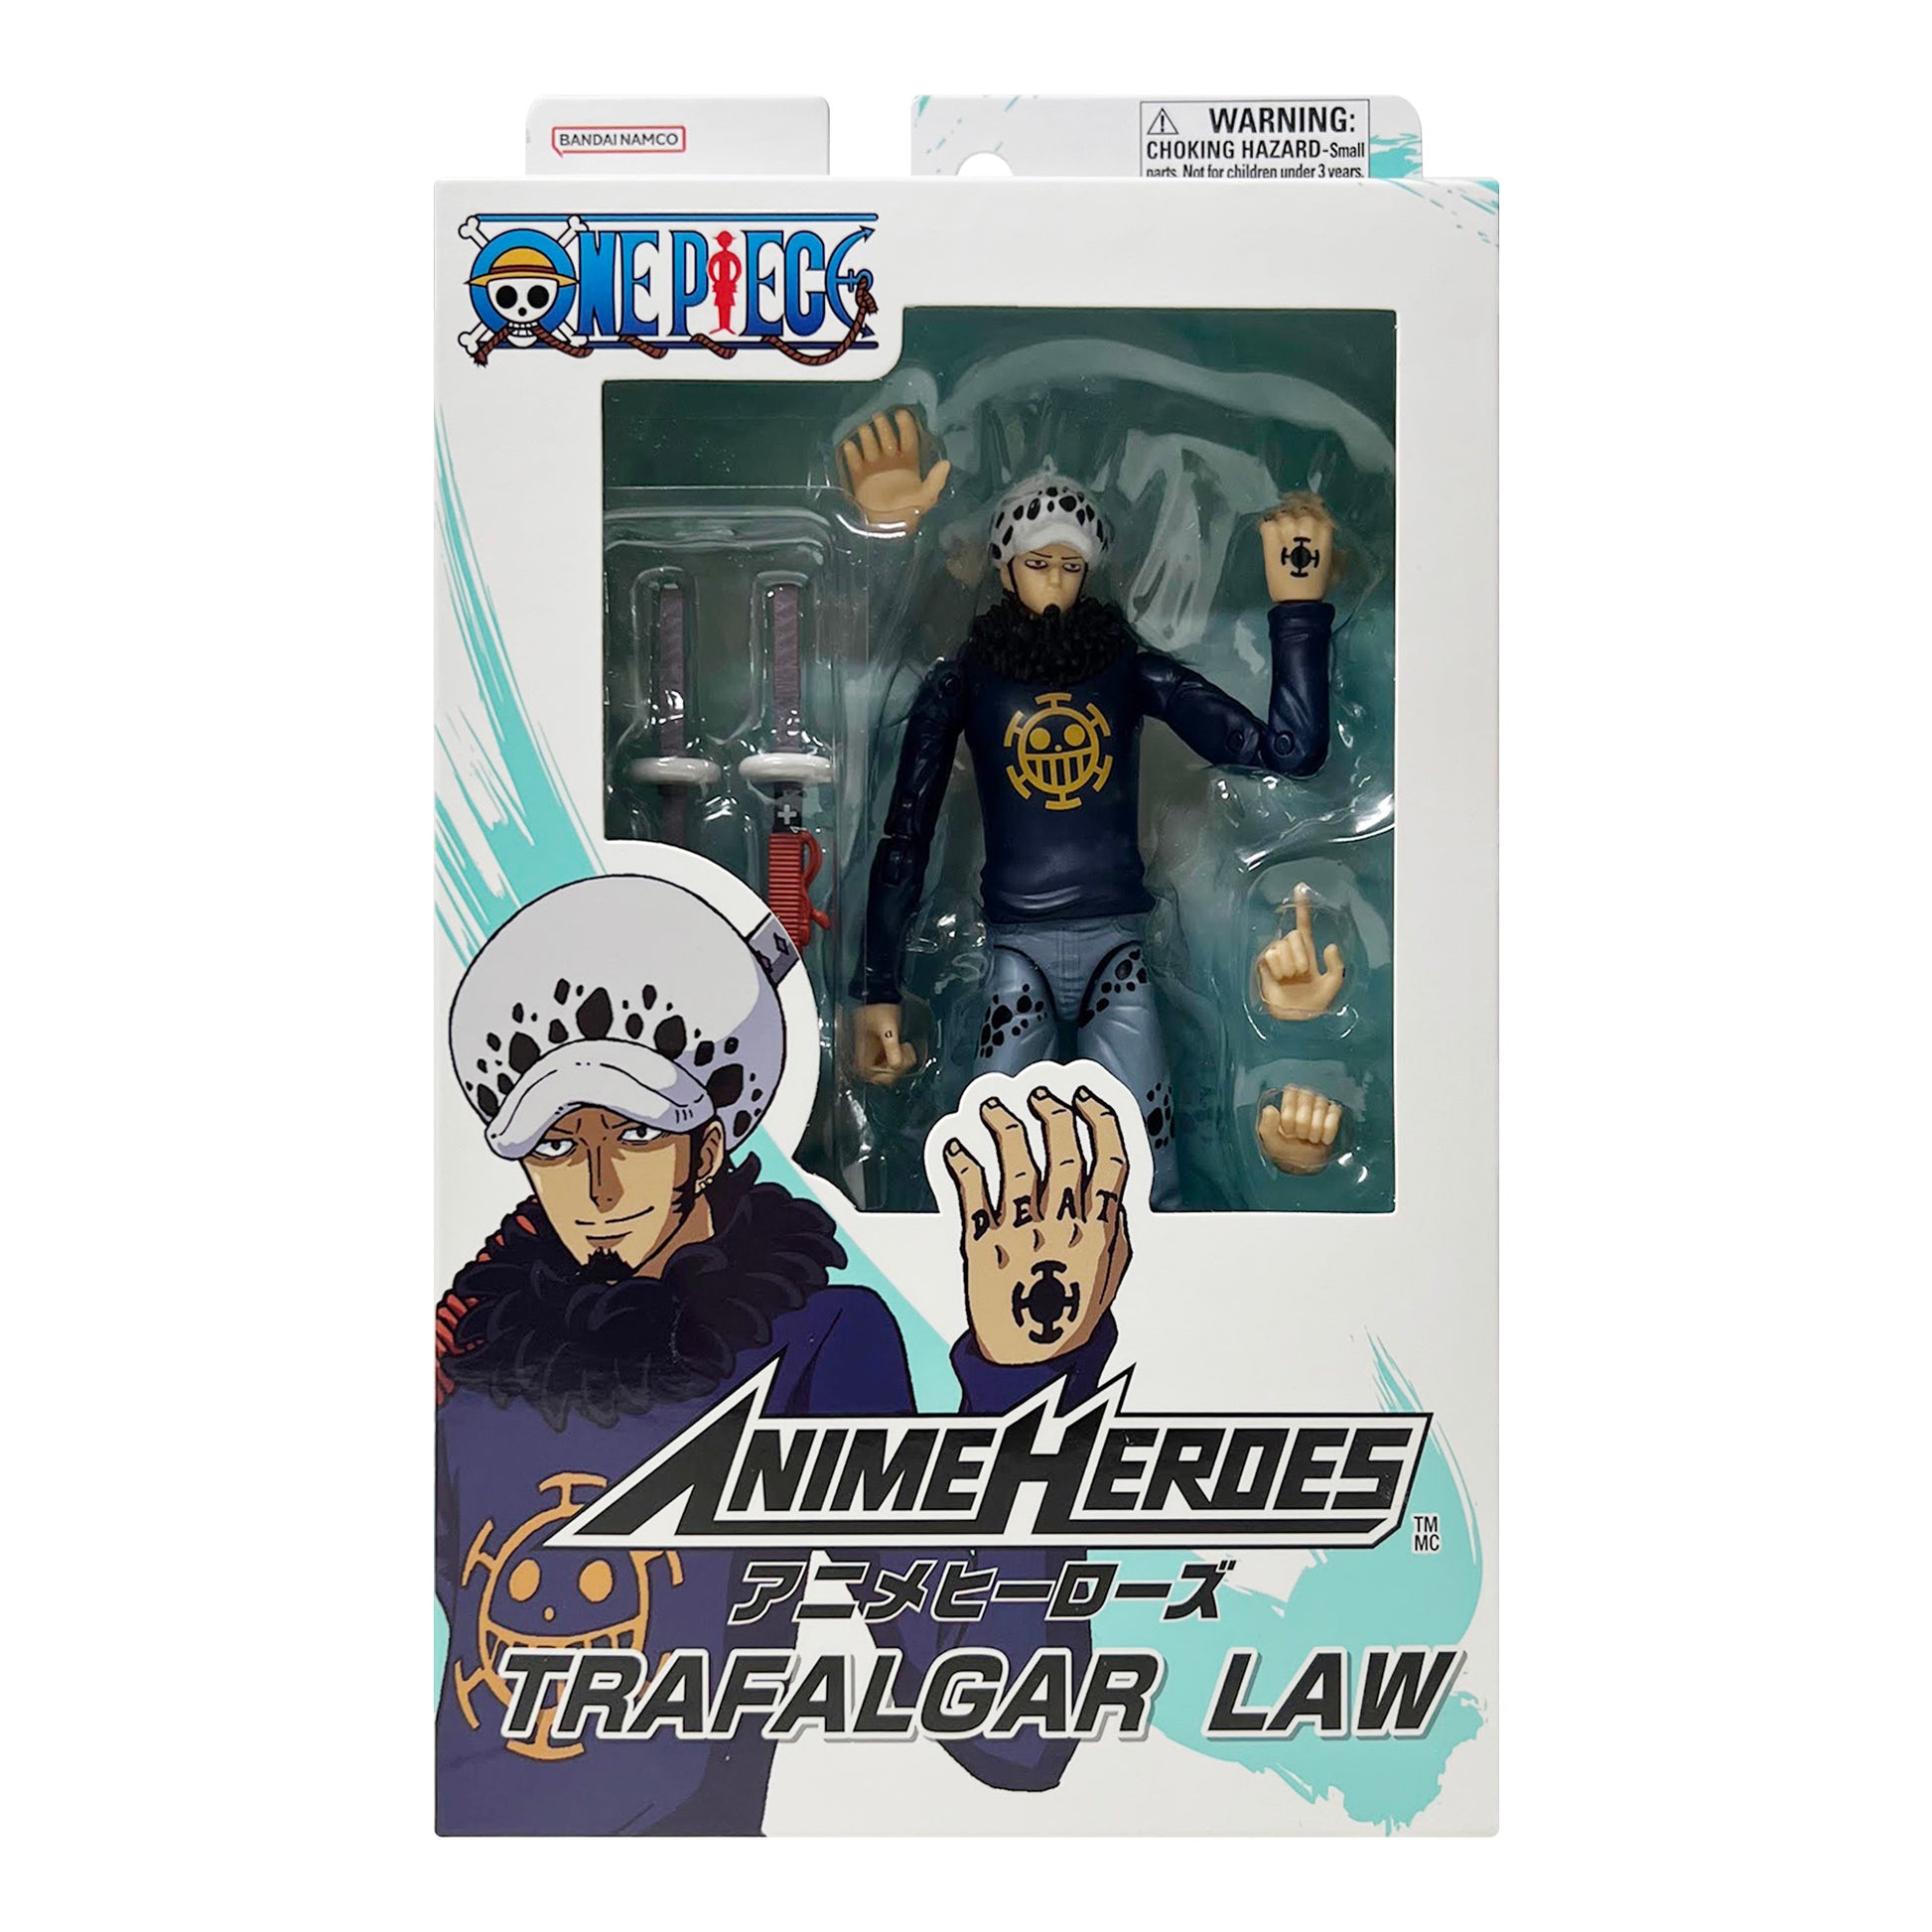 BANDAI Anime Heroes One Piece Figures Trafalgar Law Action Figure